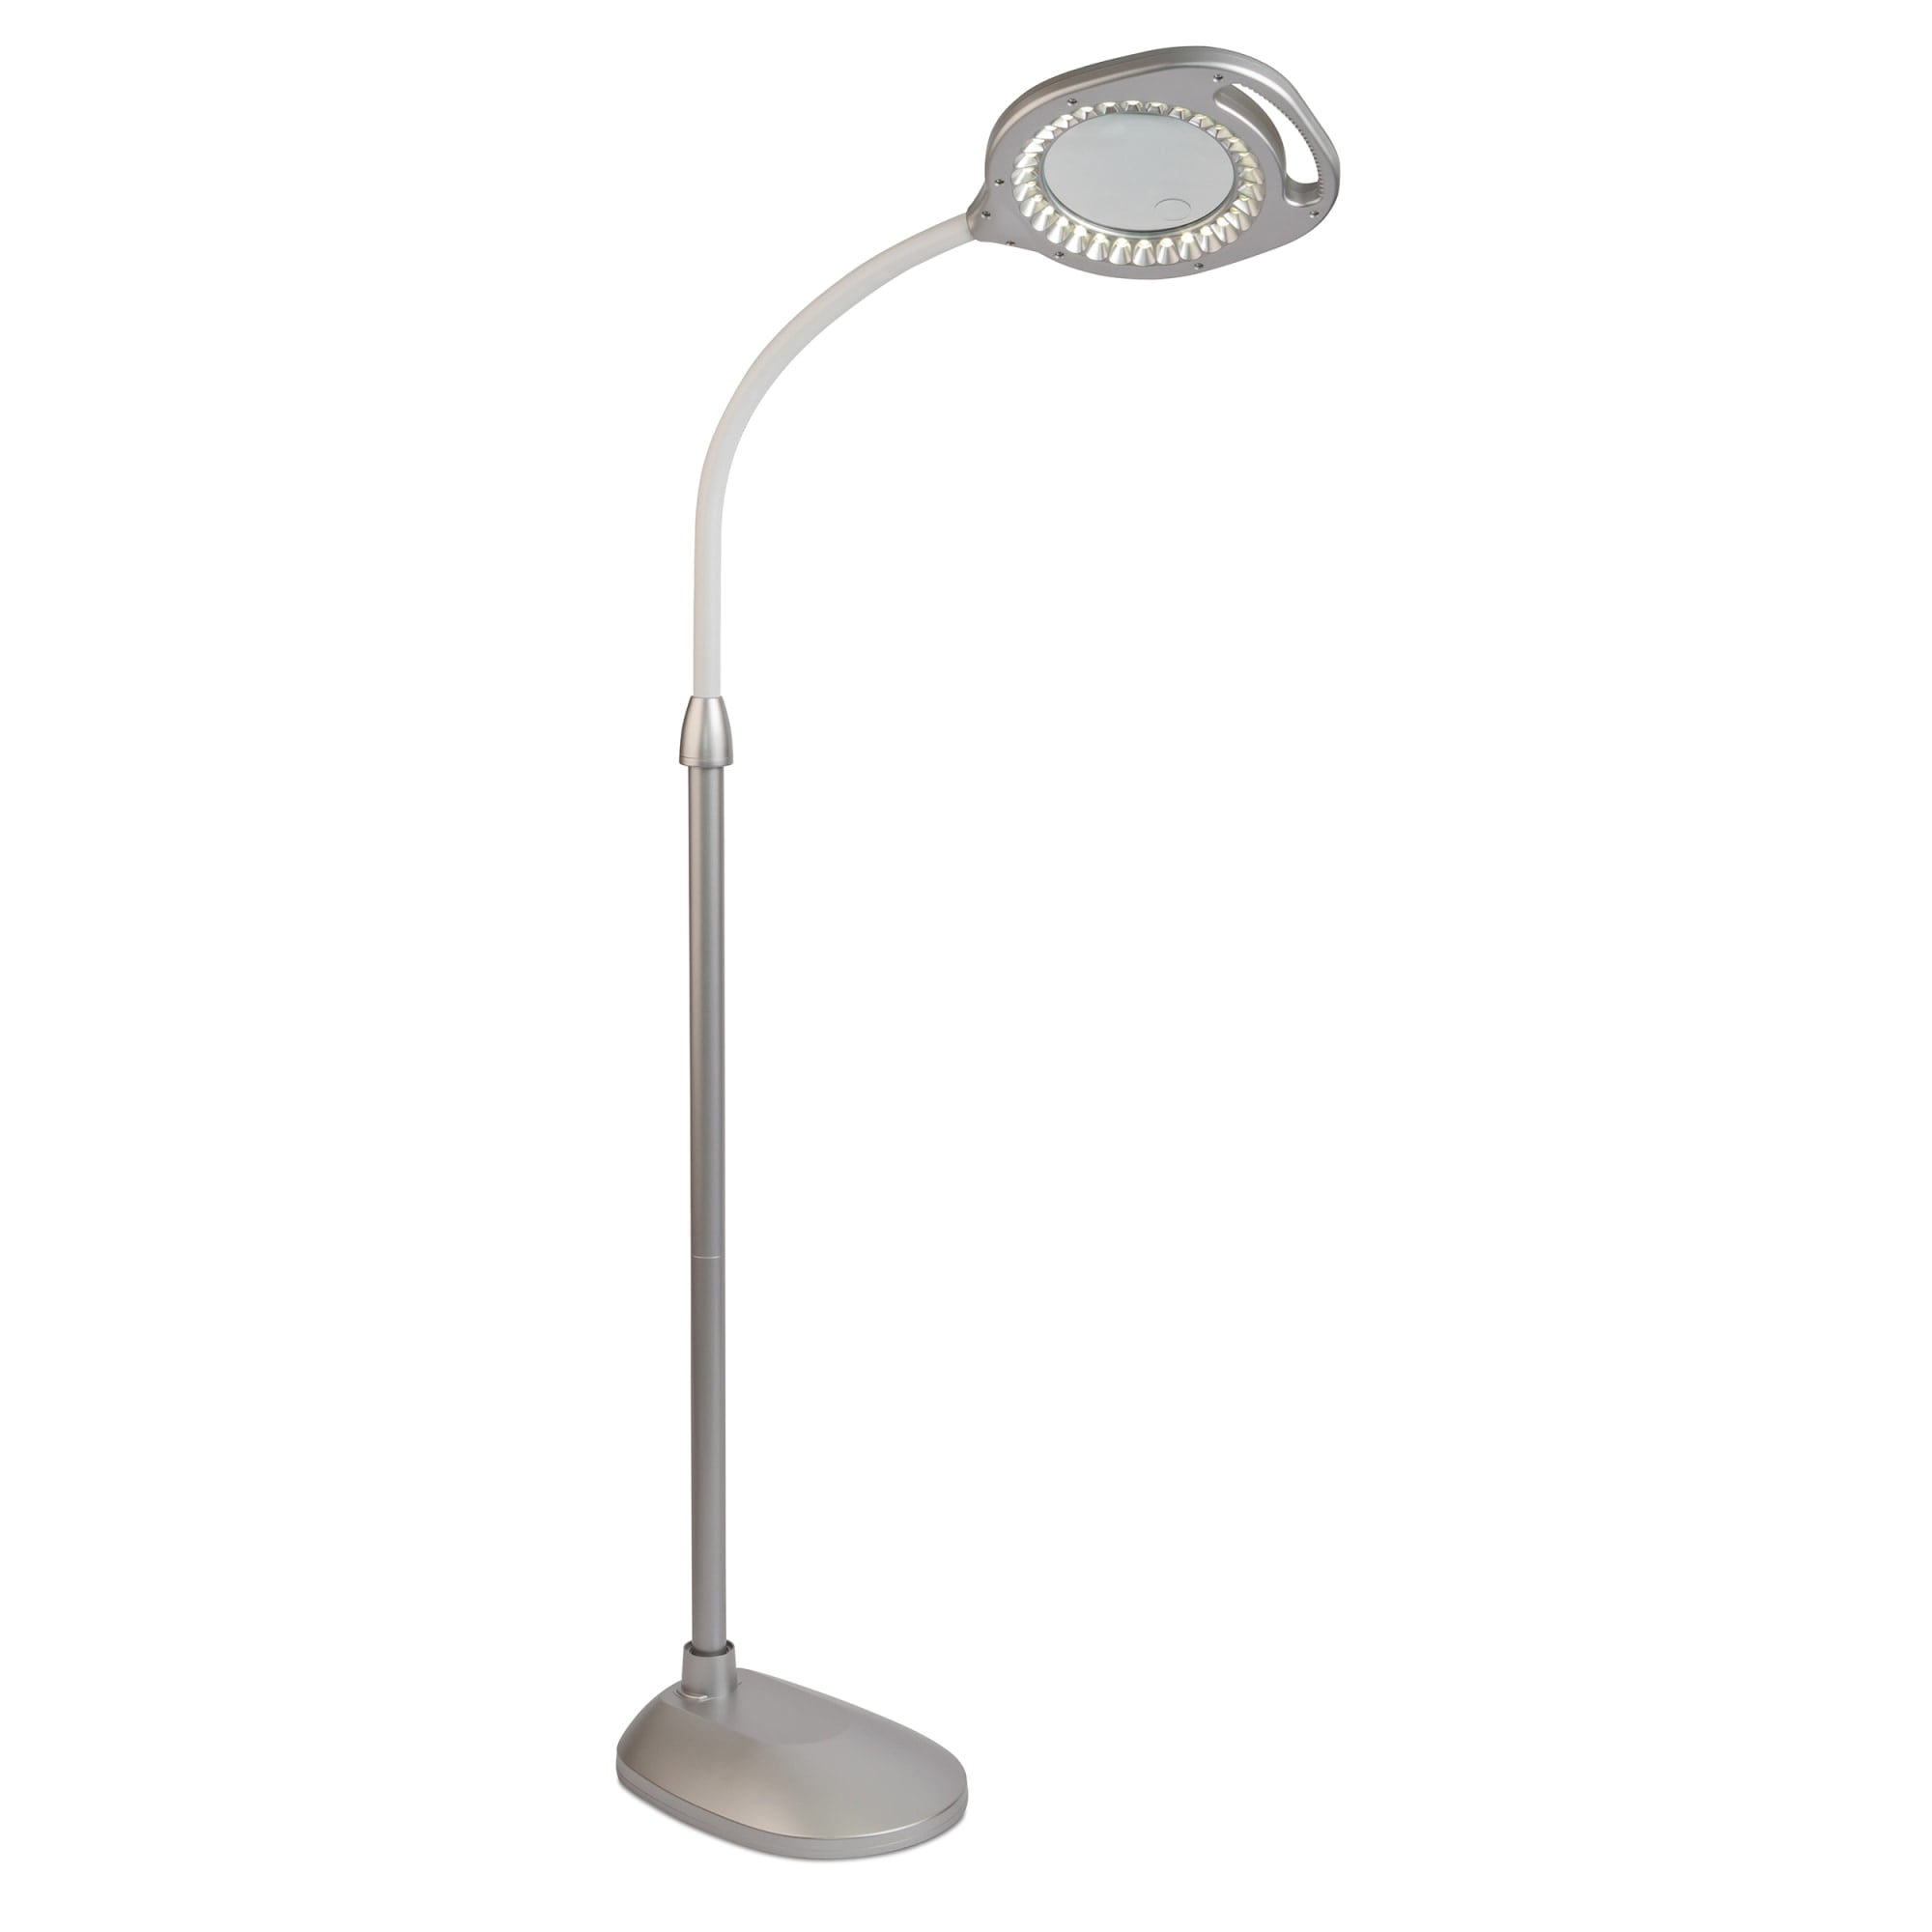 OTT-Lite M11R47 Reading Floor Lamp - household items - by owner -  housewares sale - craigslist